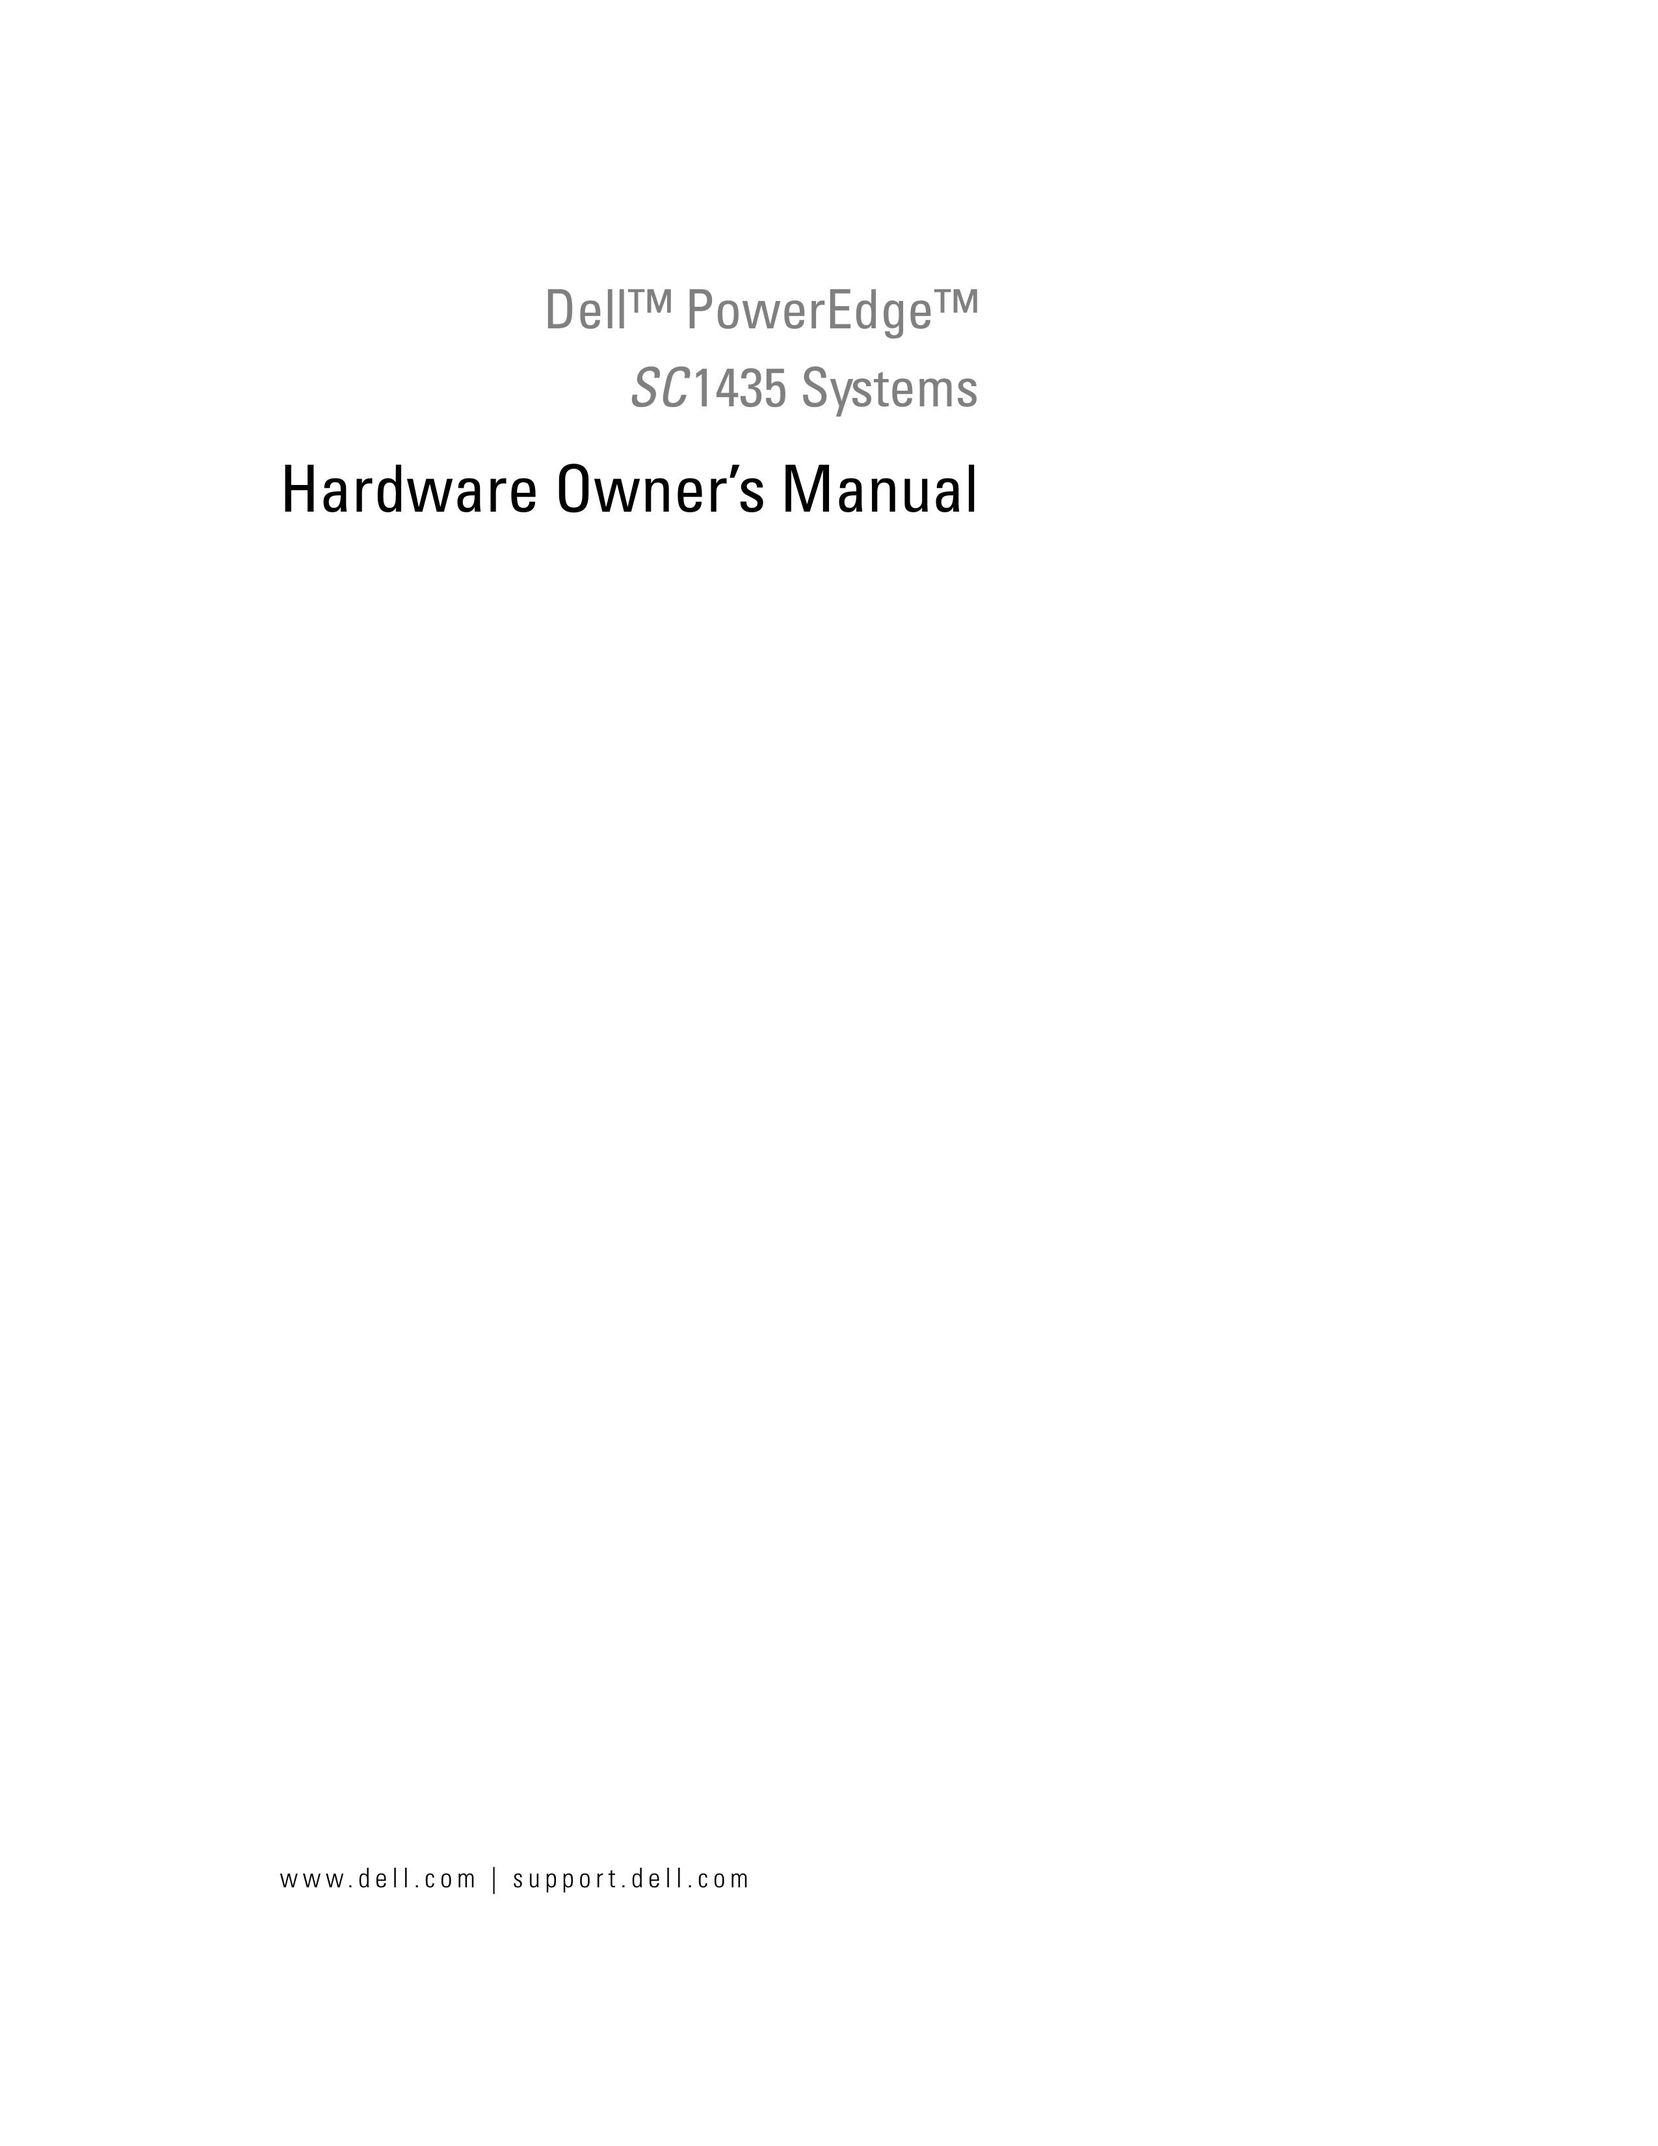 Dell SC1435 Home Theater Server User Manual